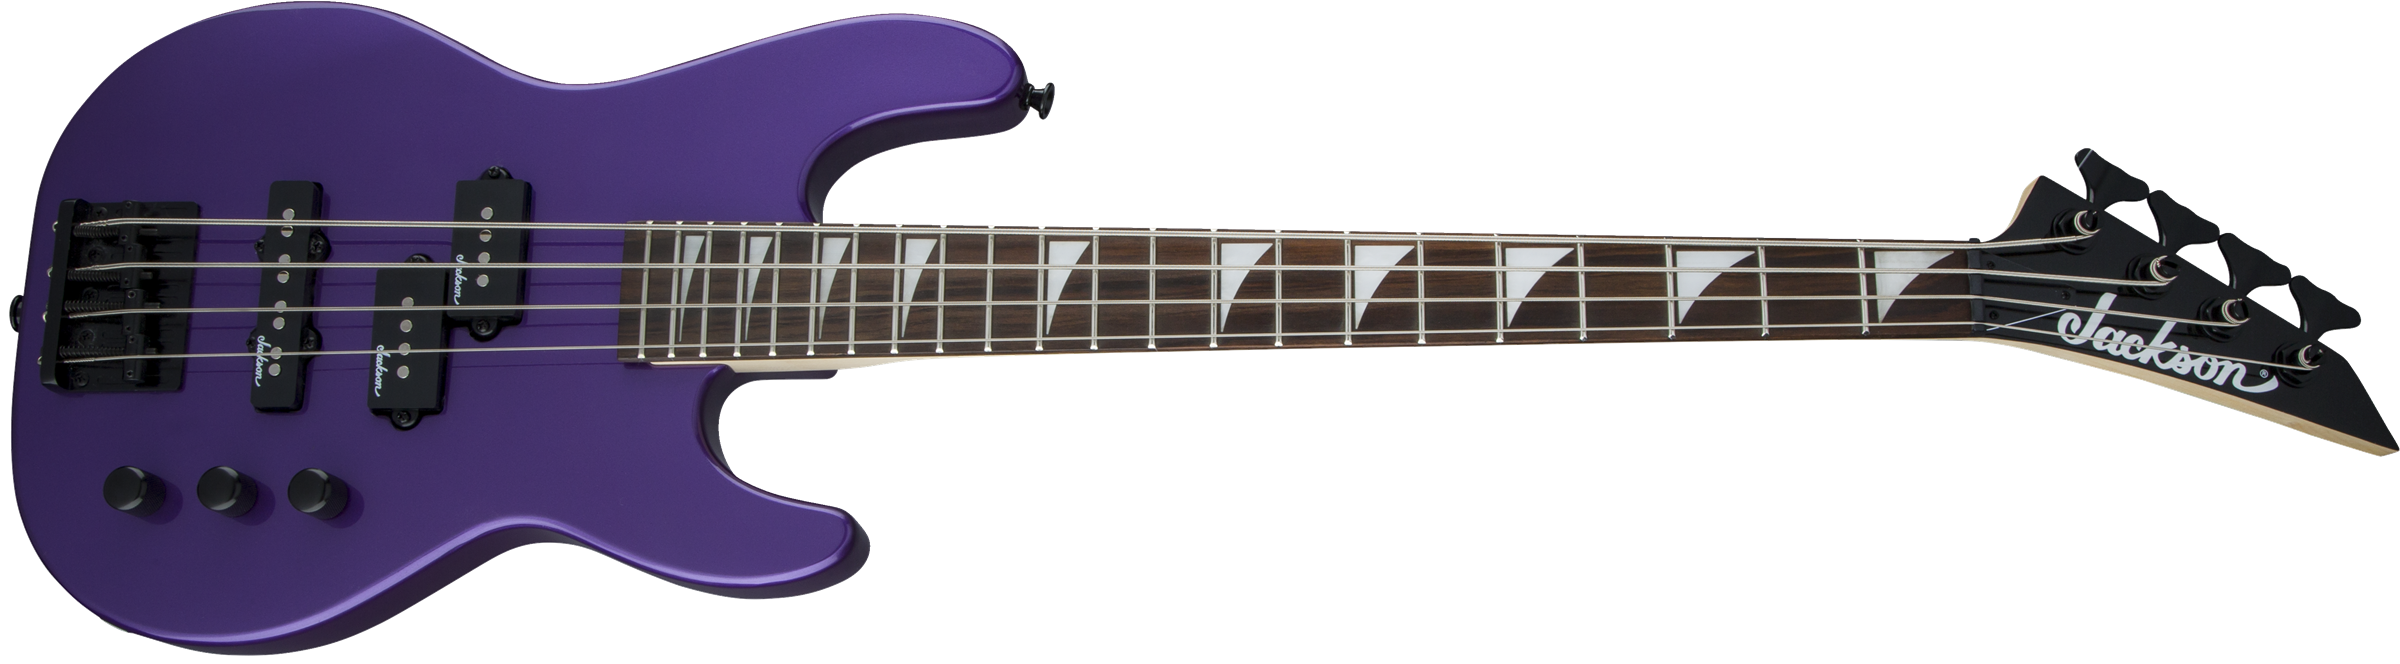 Jackson Js Series Concert Bass Minion Js1x - Pavo Purple - Electric bass for kids - Variation 3